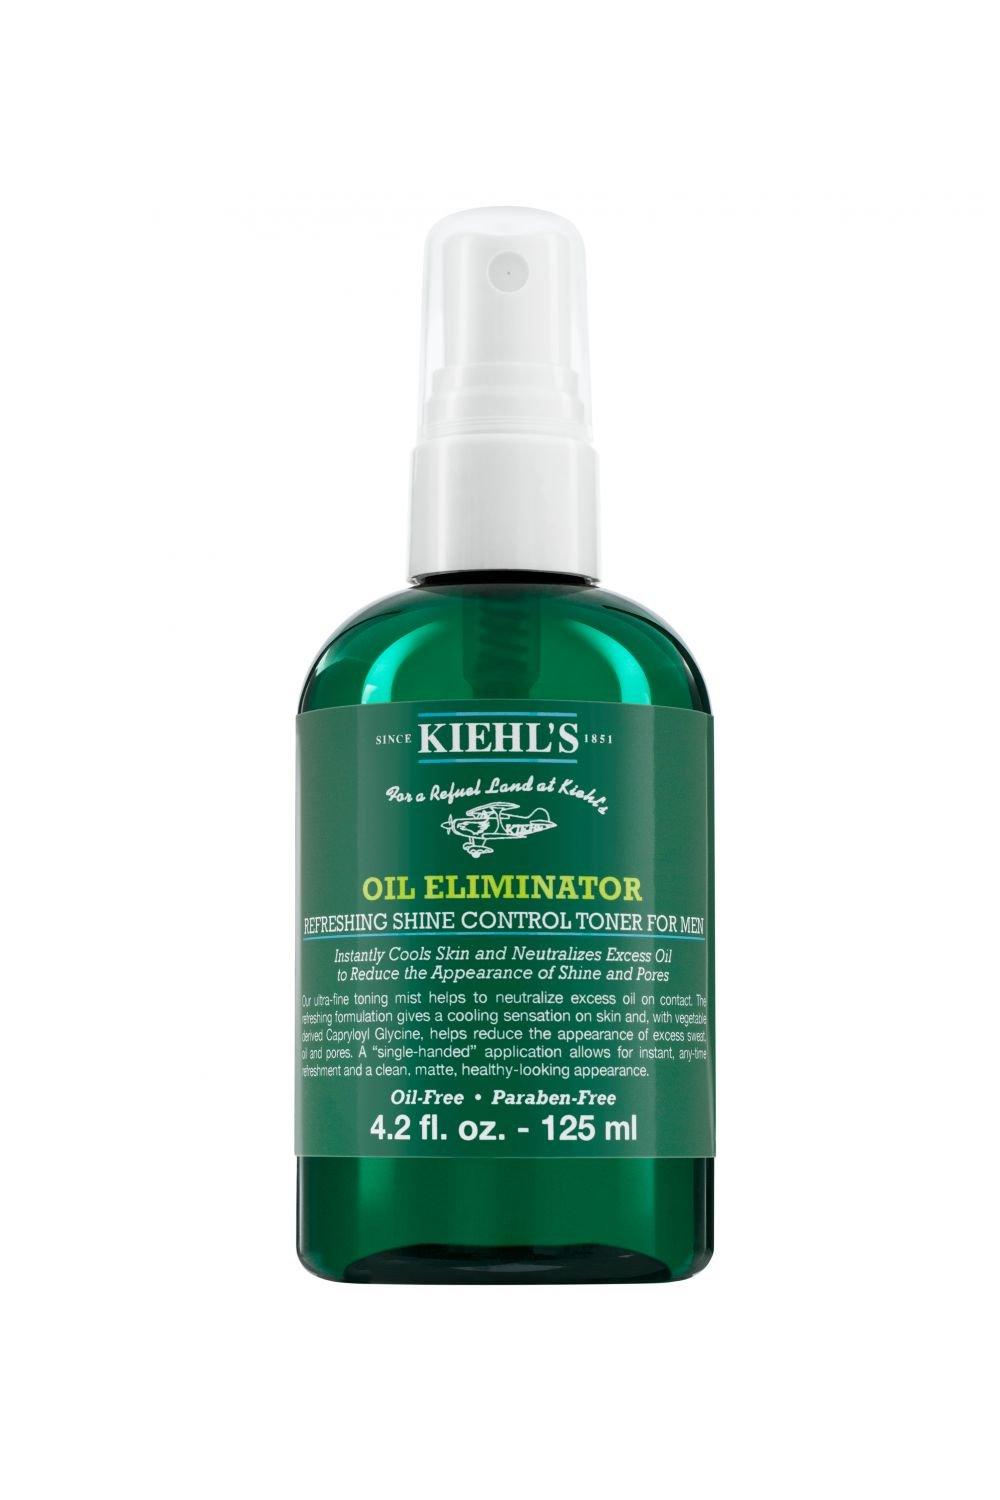 Image of Kiehl's Oil Eliminator Oil Eliminator - Refreshing Shine Control Toner - 125ml